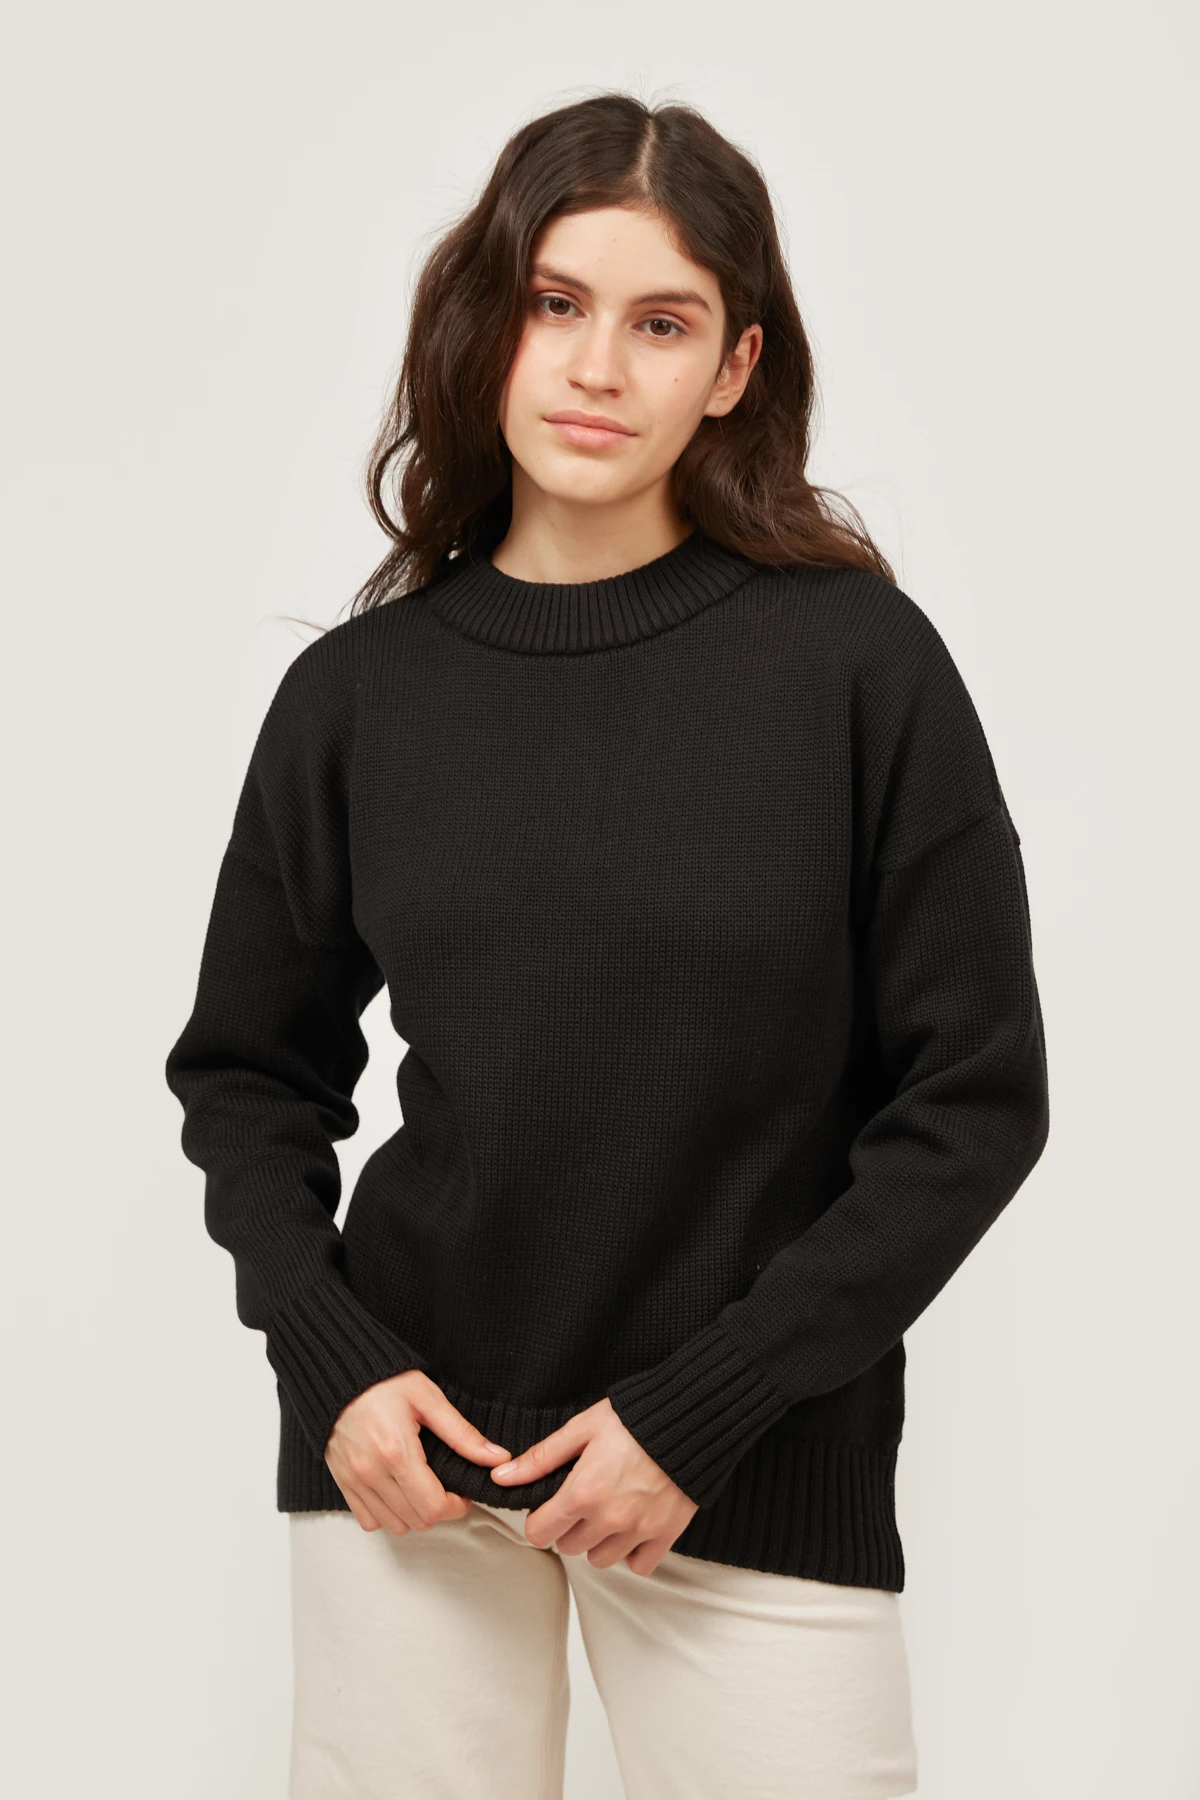 Black cotton sweater, photo 3